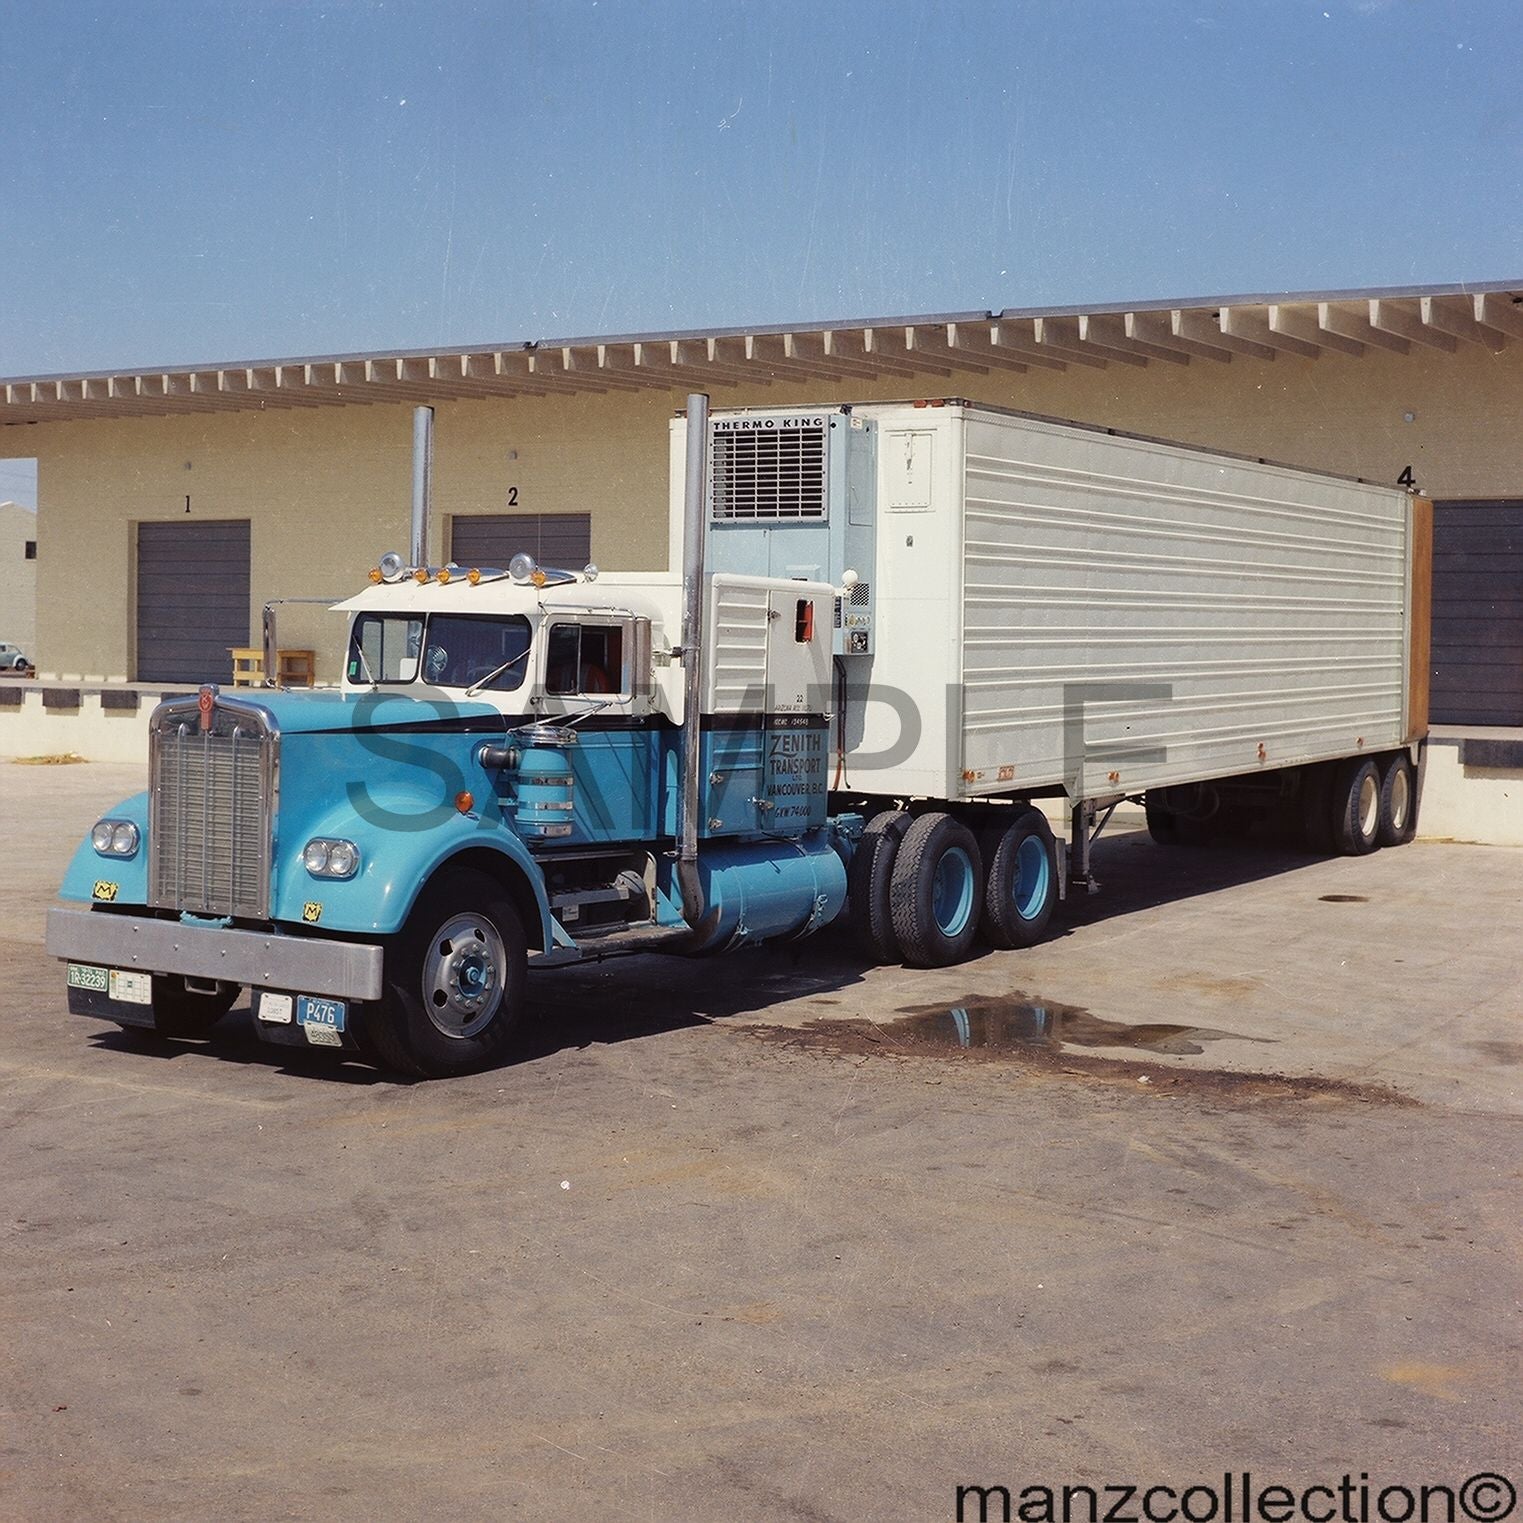 8 X 10 color semi-truck photo '60's KW ZENITH TRANSPORT - Transportation Treasure